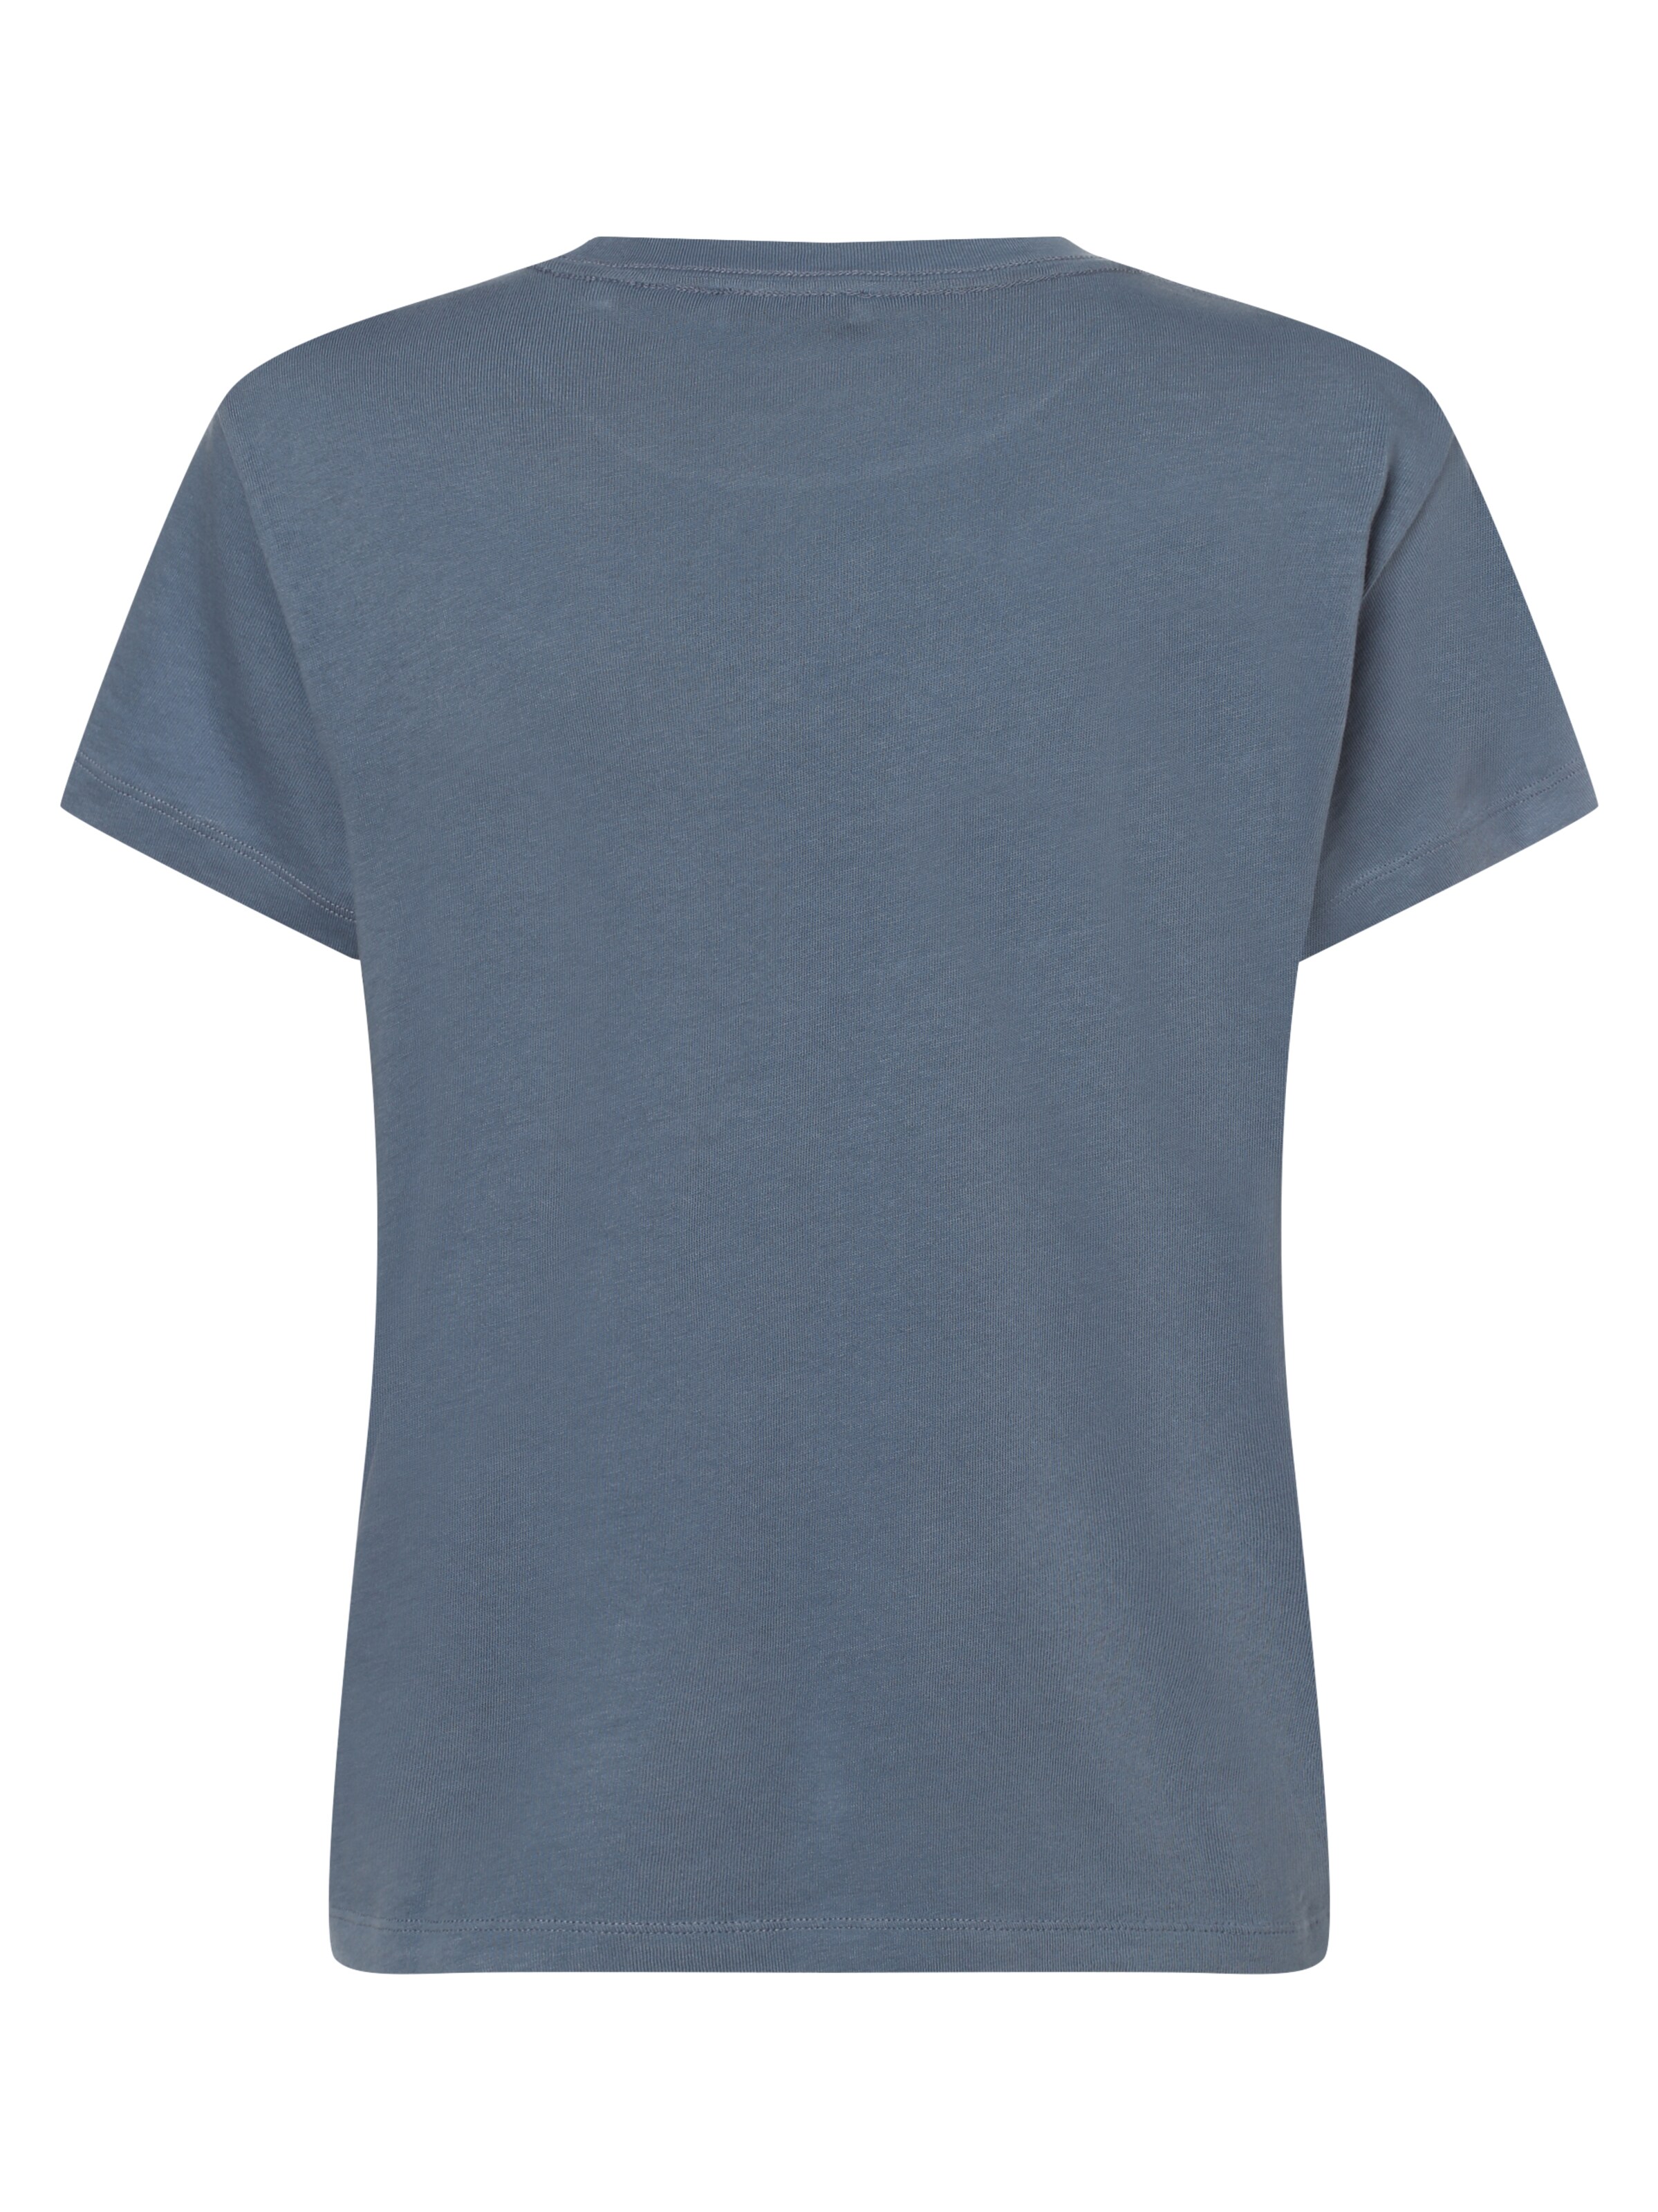 Marc OPolo T-Shirt in Taubenblau, Nachtblau 